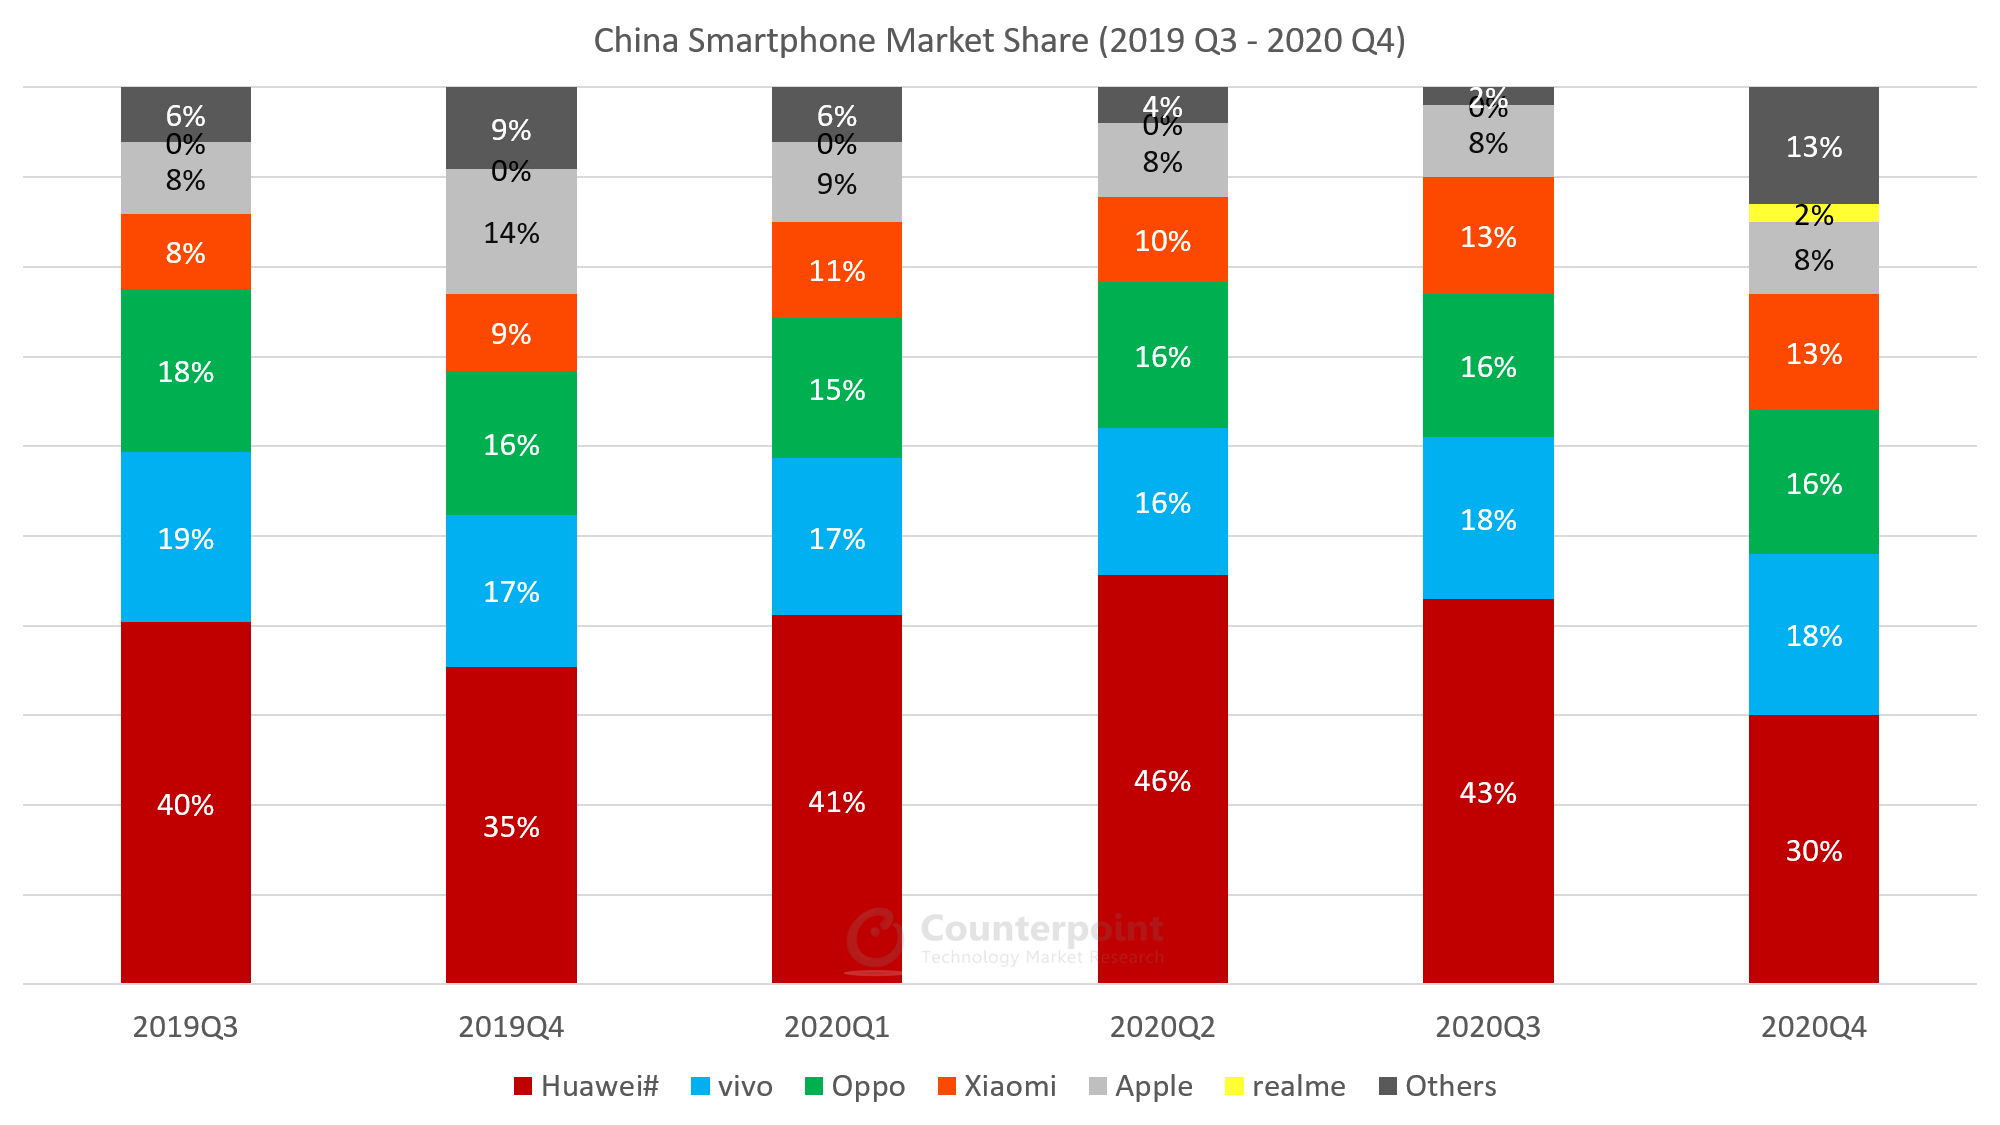 Counterpoint China Smartphone Quarterly Market Data 2019Q3 2020Q4 1